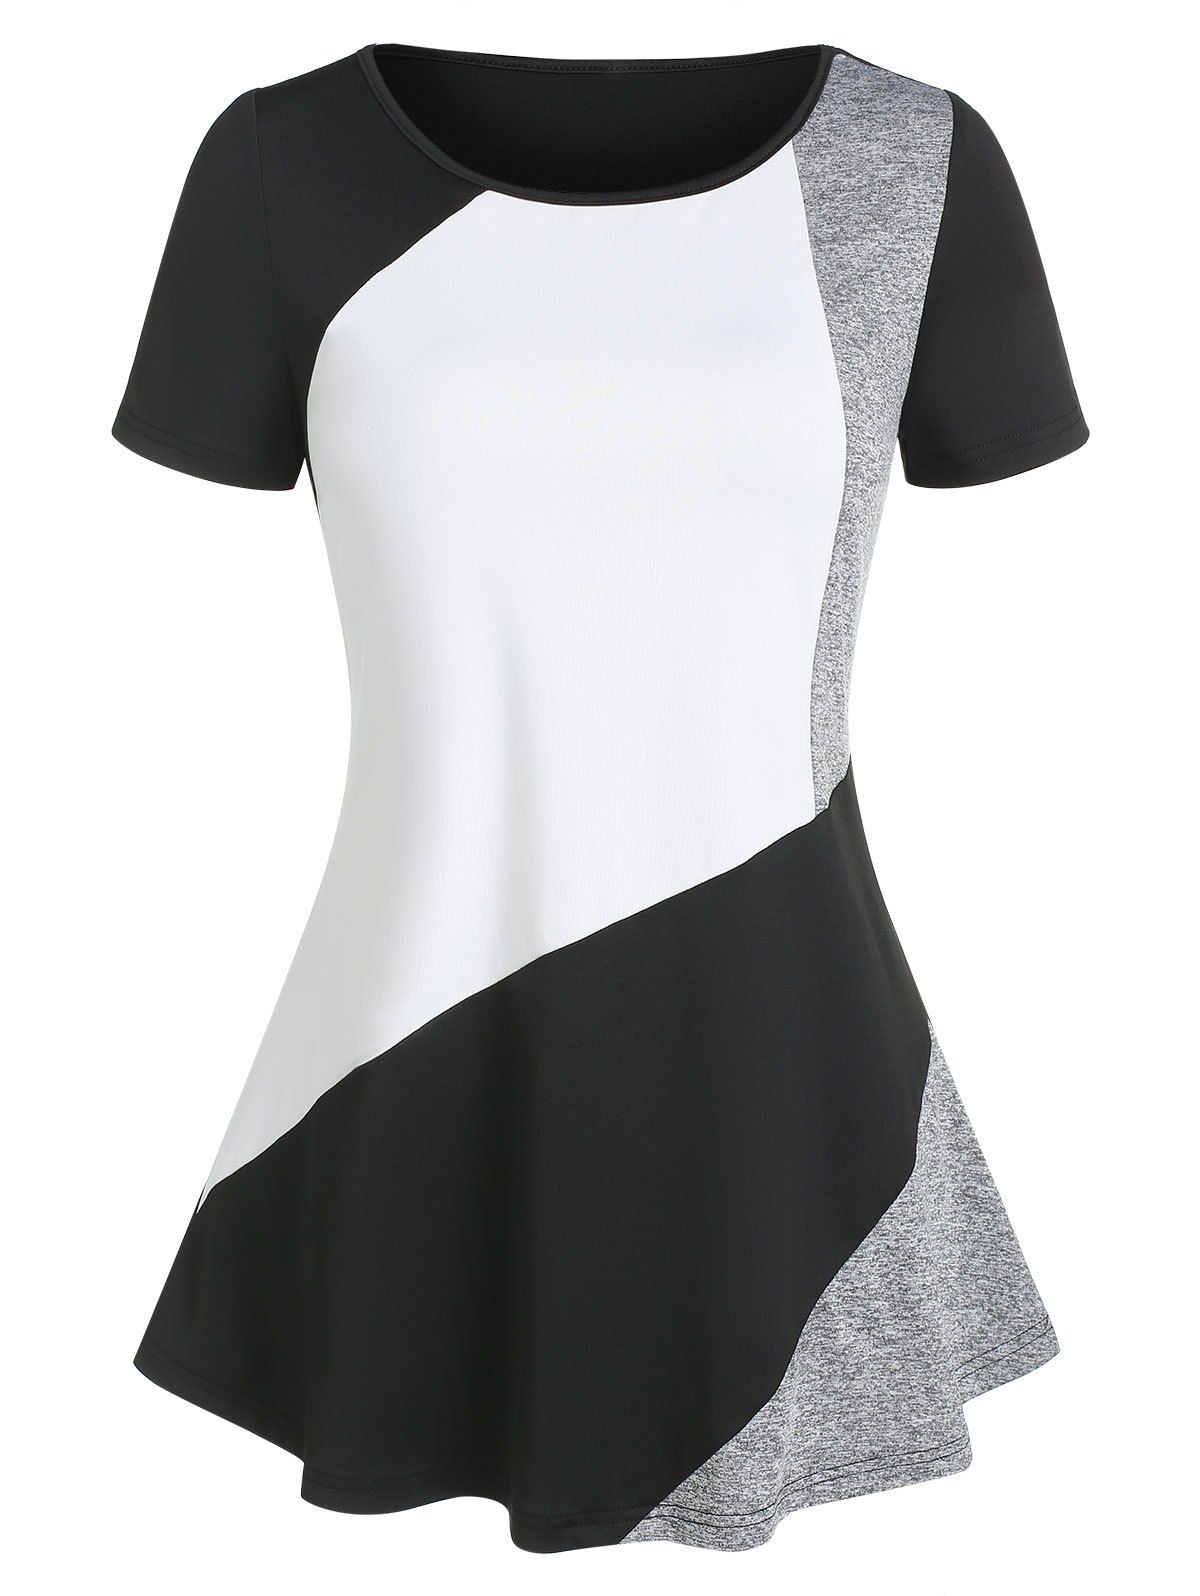 Contrast Colorblock Short Sleeve T-shirt - BLACK M